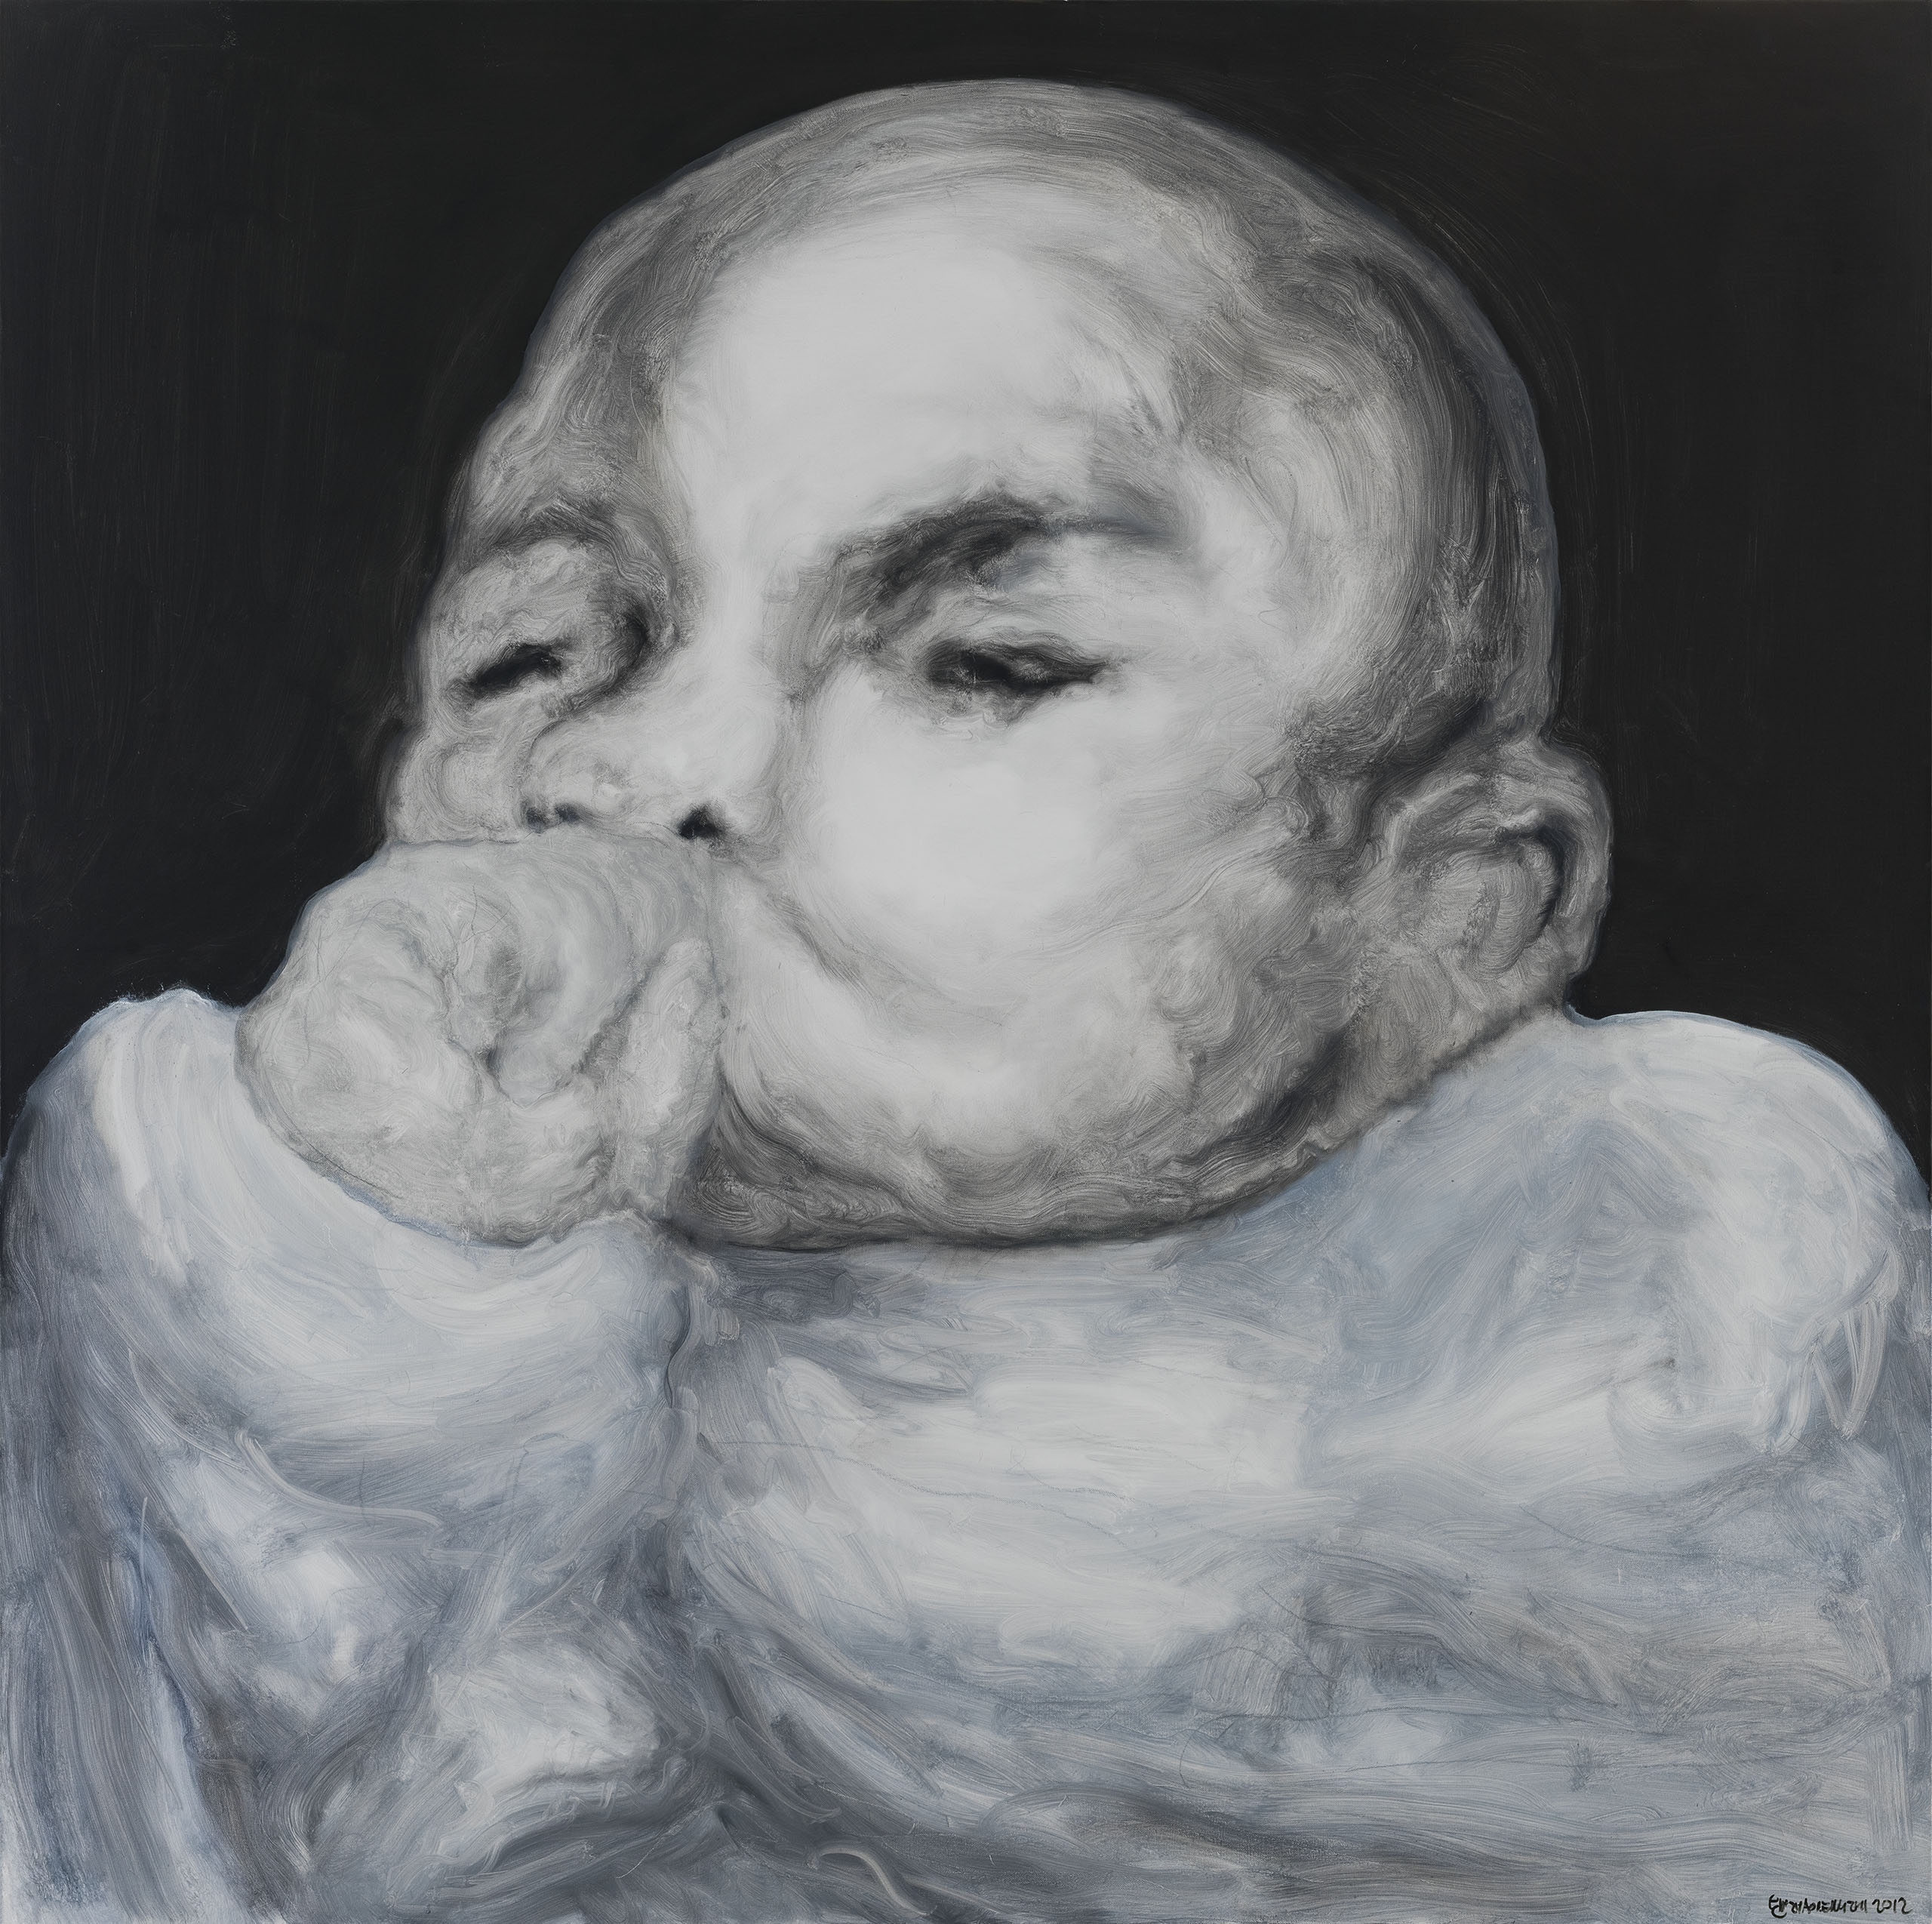 Infant No.2, Oil on canvas, 120x120cm, 2012